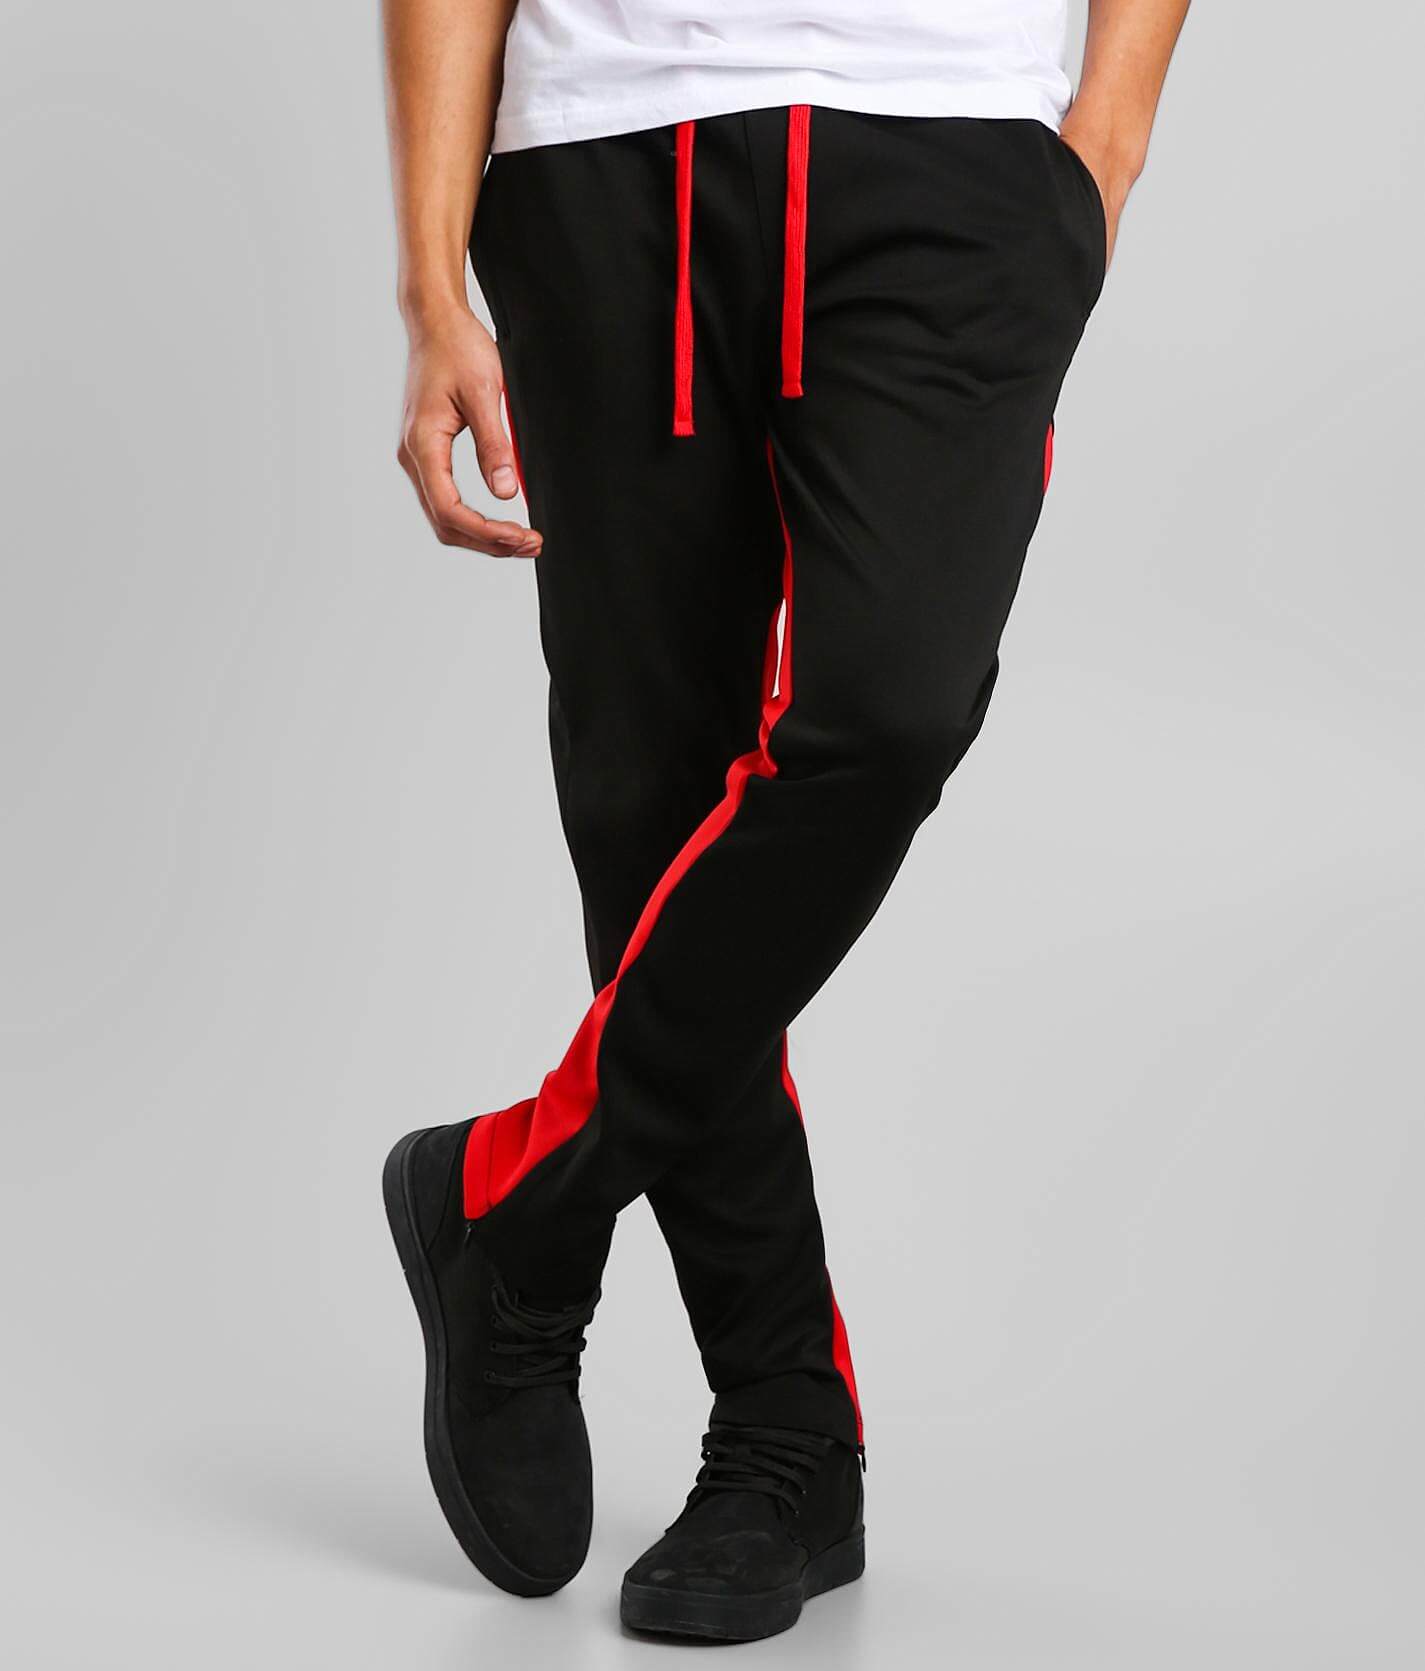 PREME Color Block Jogger - Men's Pants in Black Red | Buckle